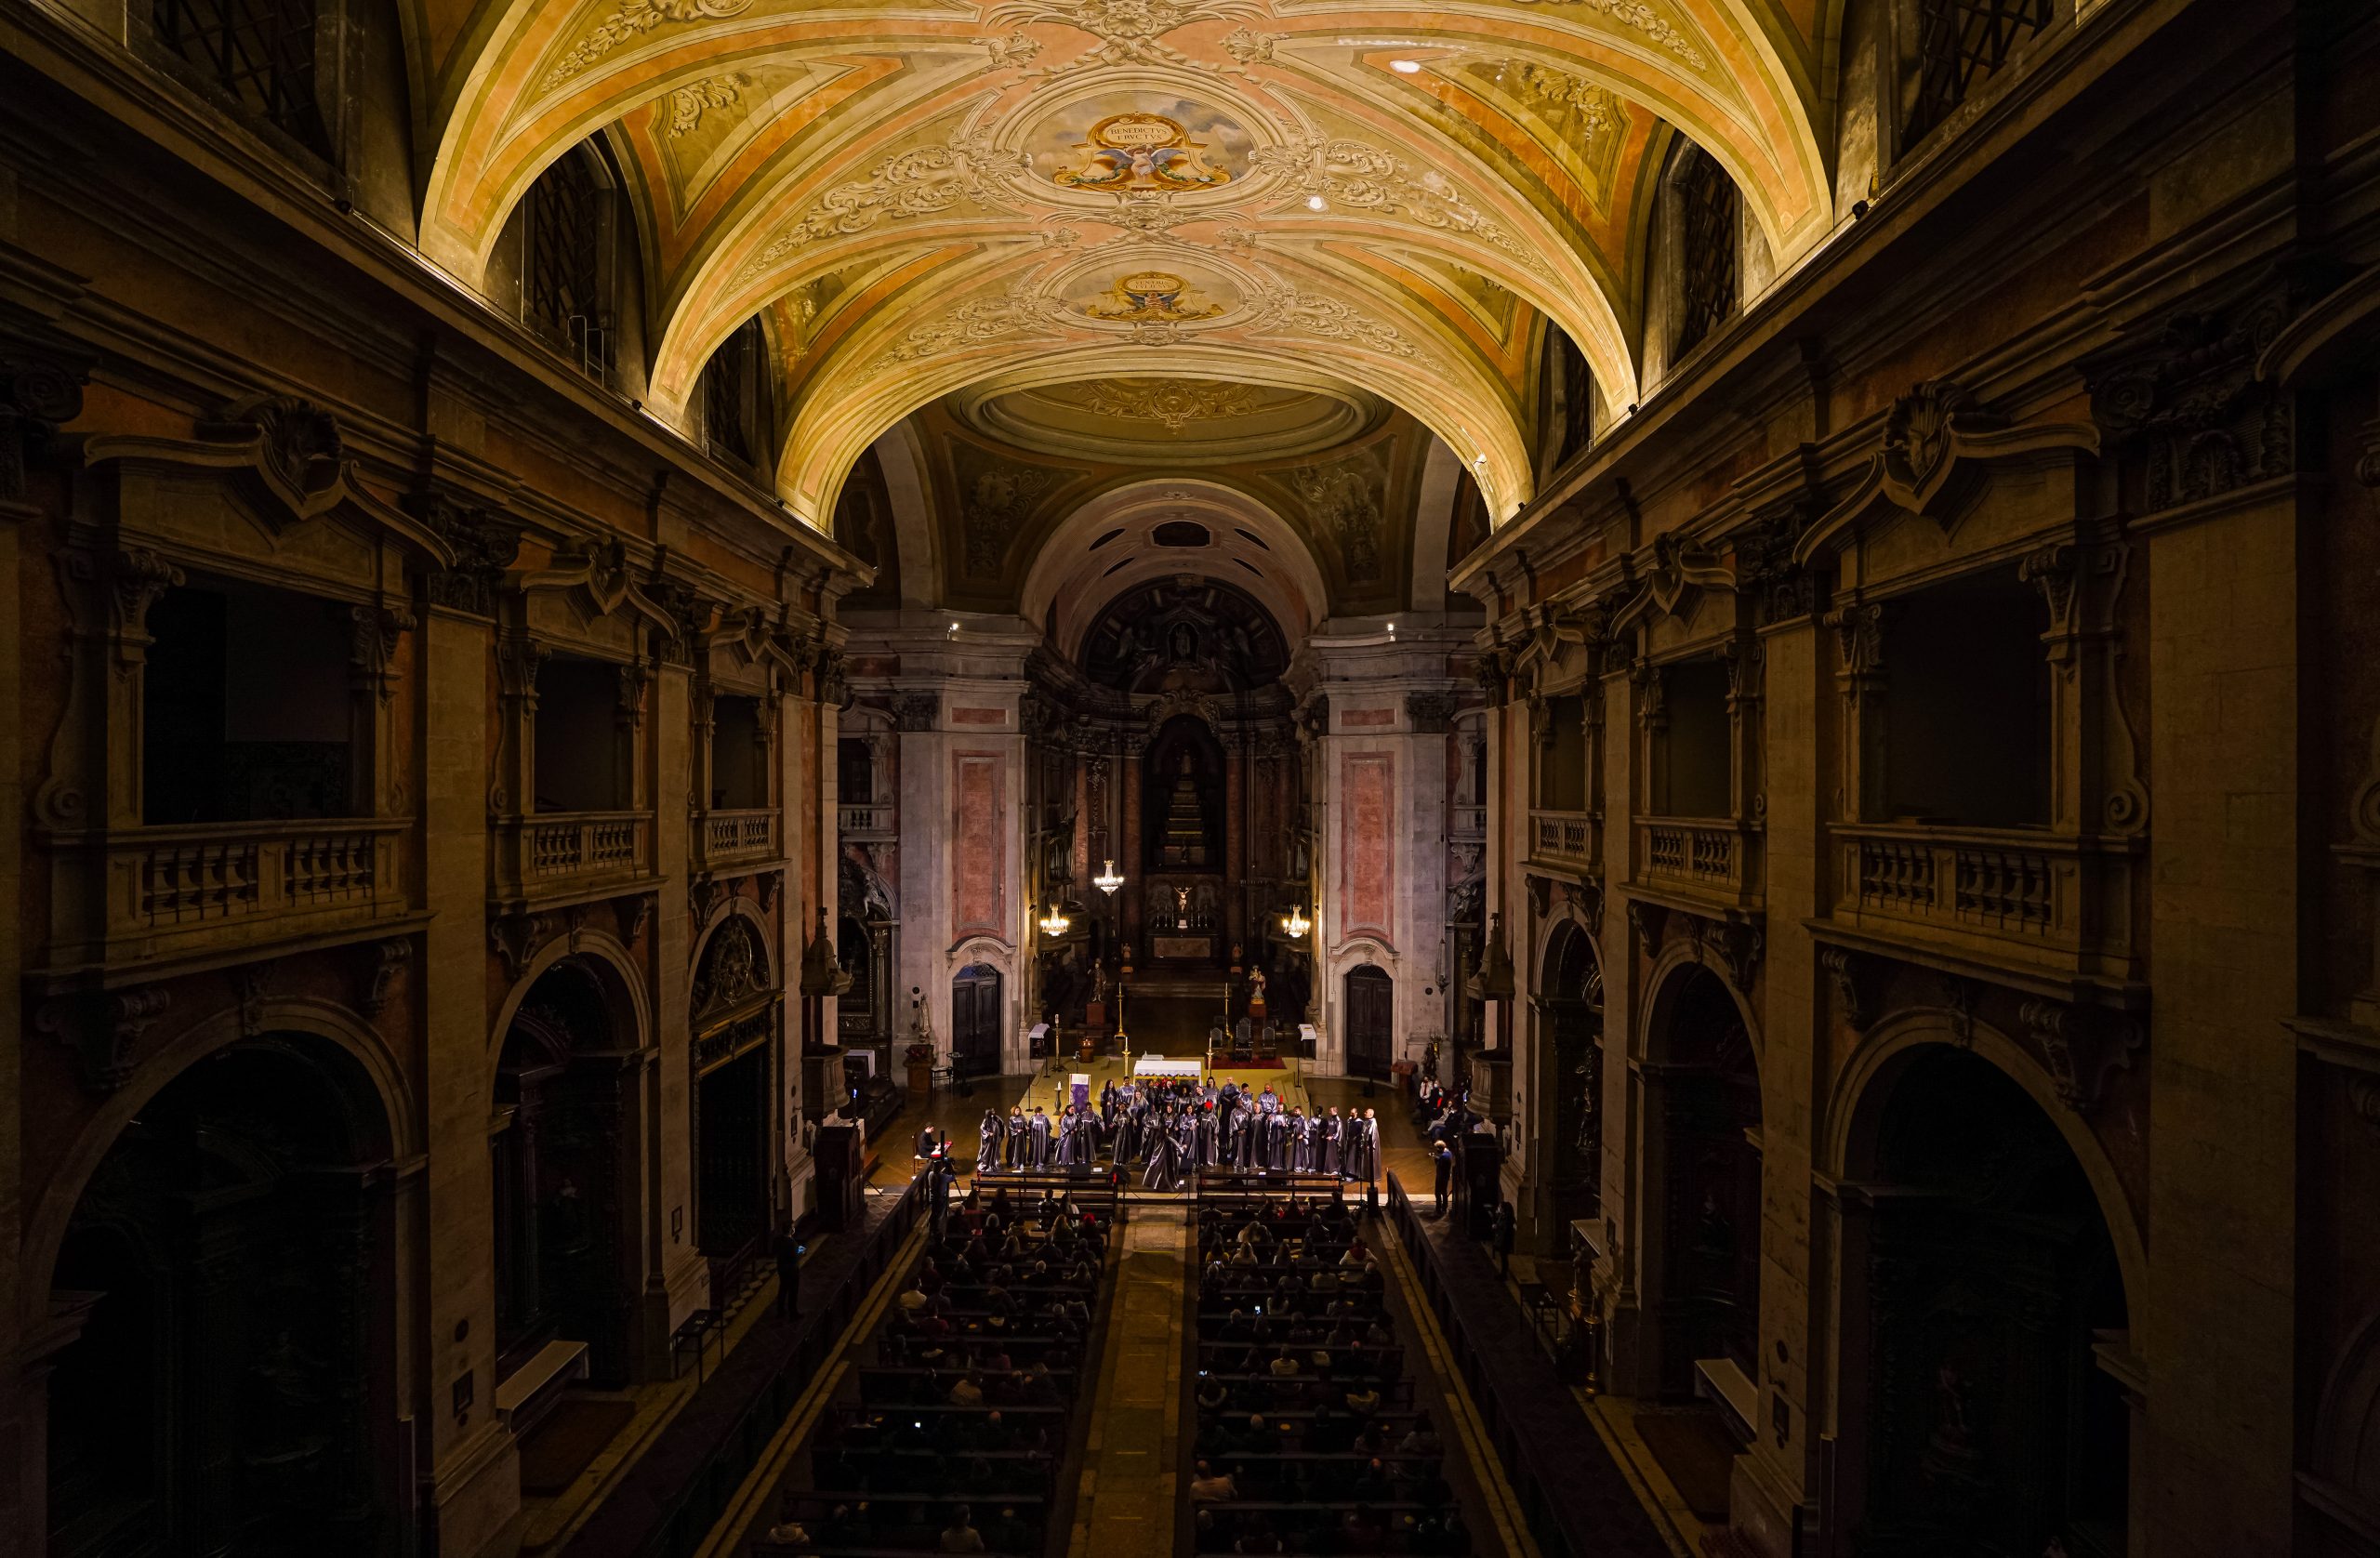 Inside the Church, a choir performs next to the altar.